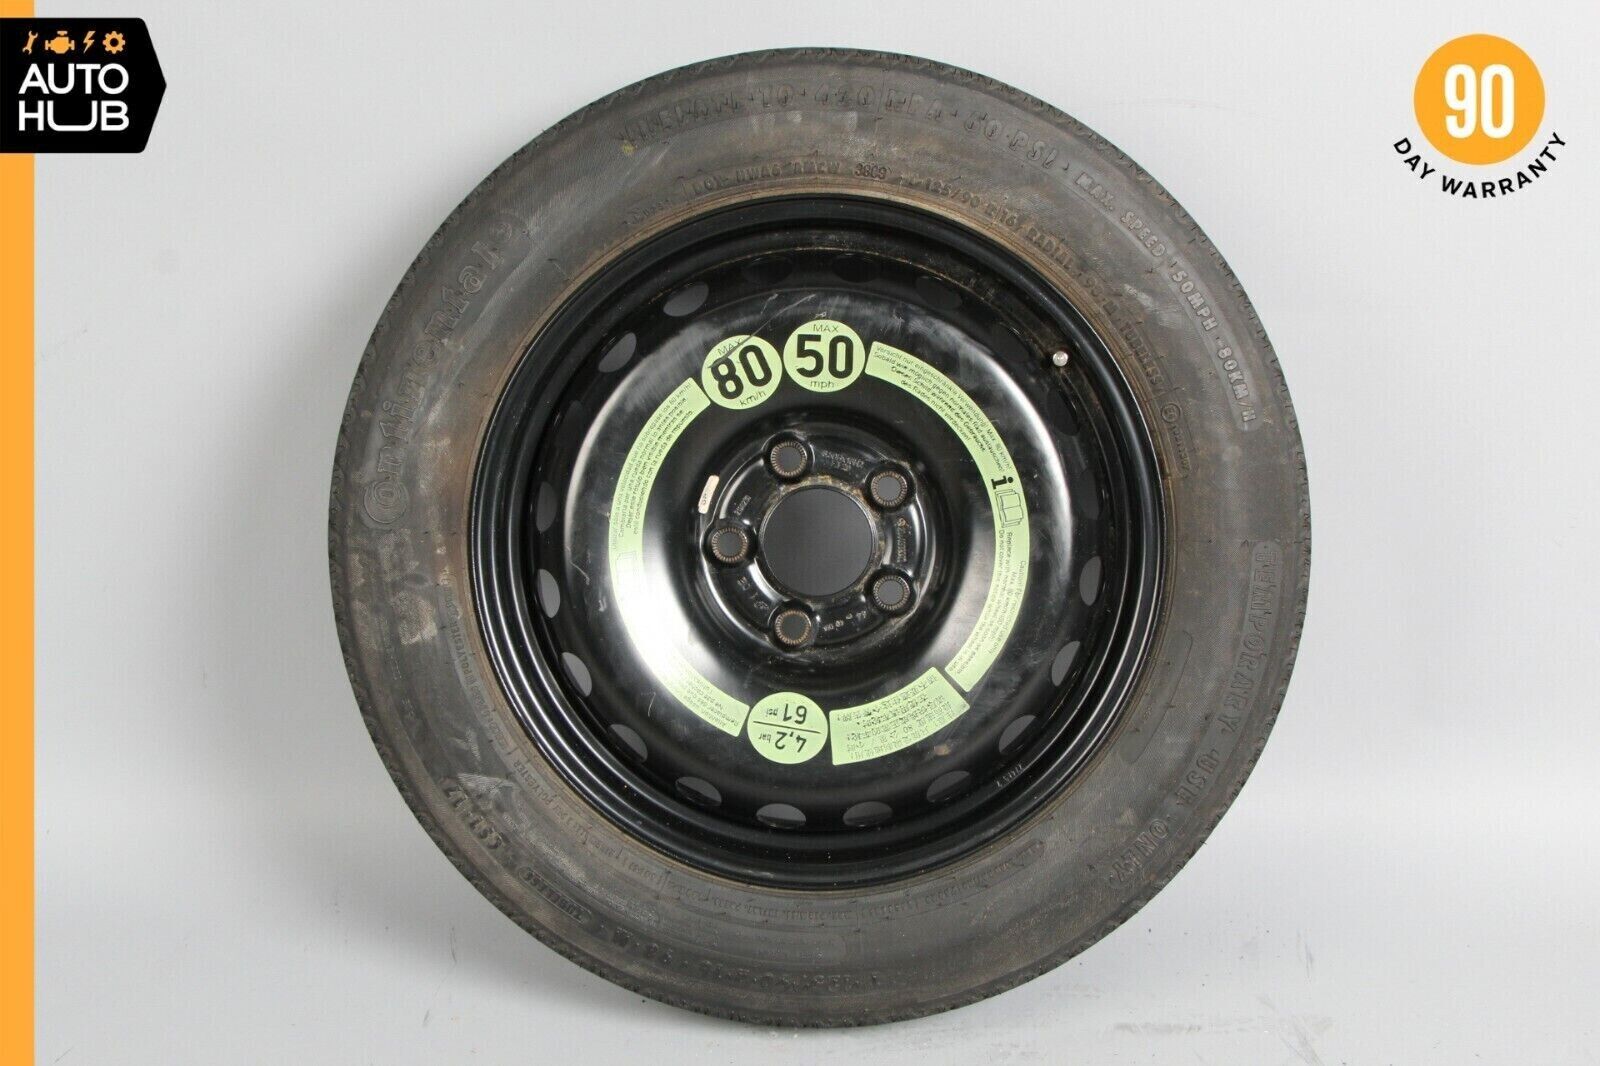 Mercedes W204 C250 C300 C350 Emergency Spare Tire Wheel Donut Rim 125 90 16